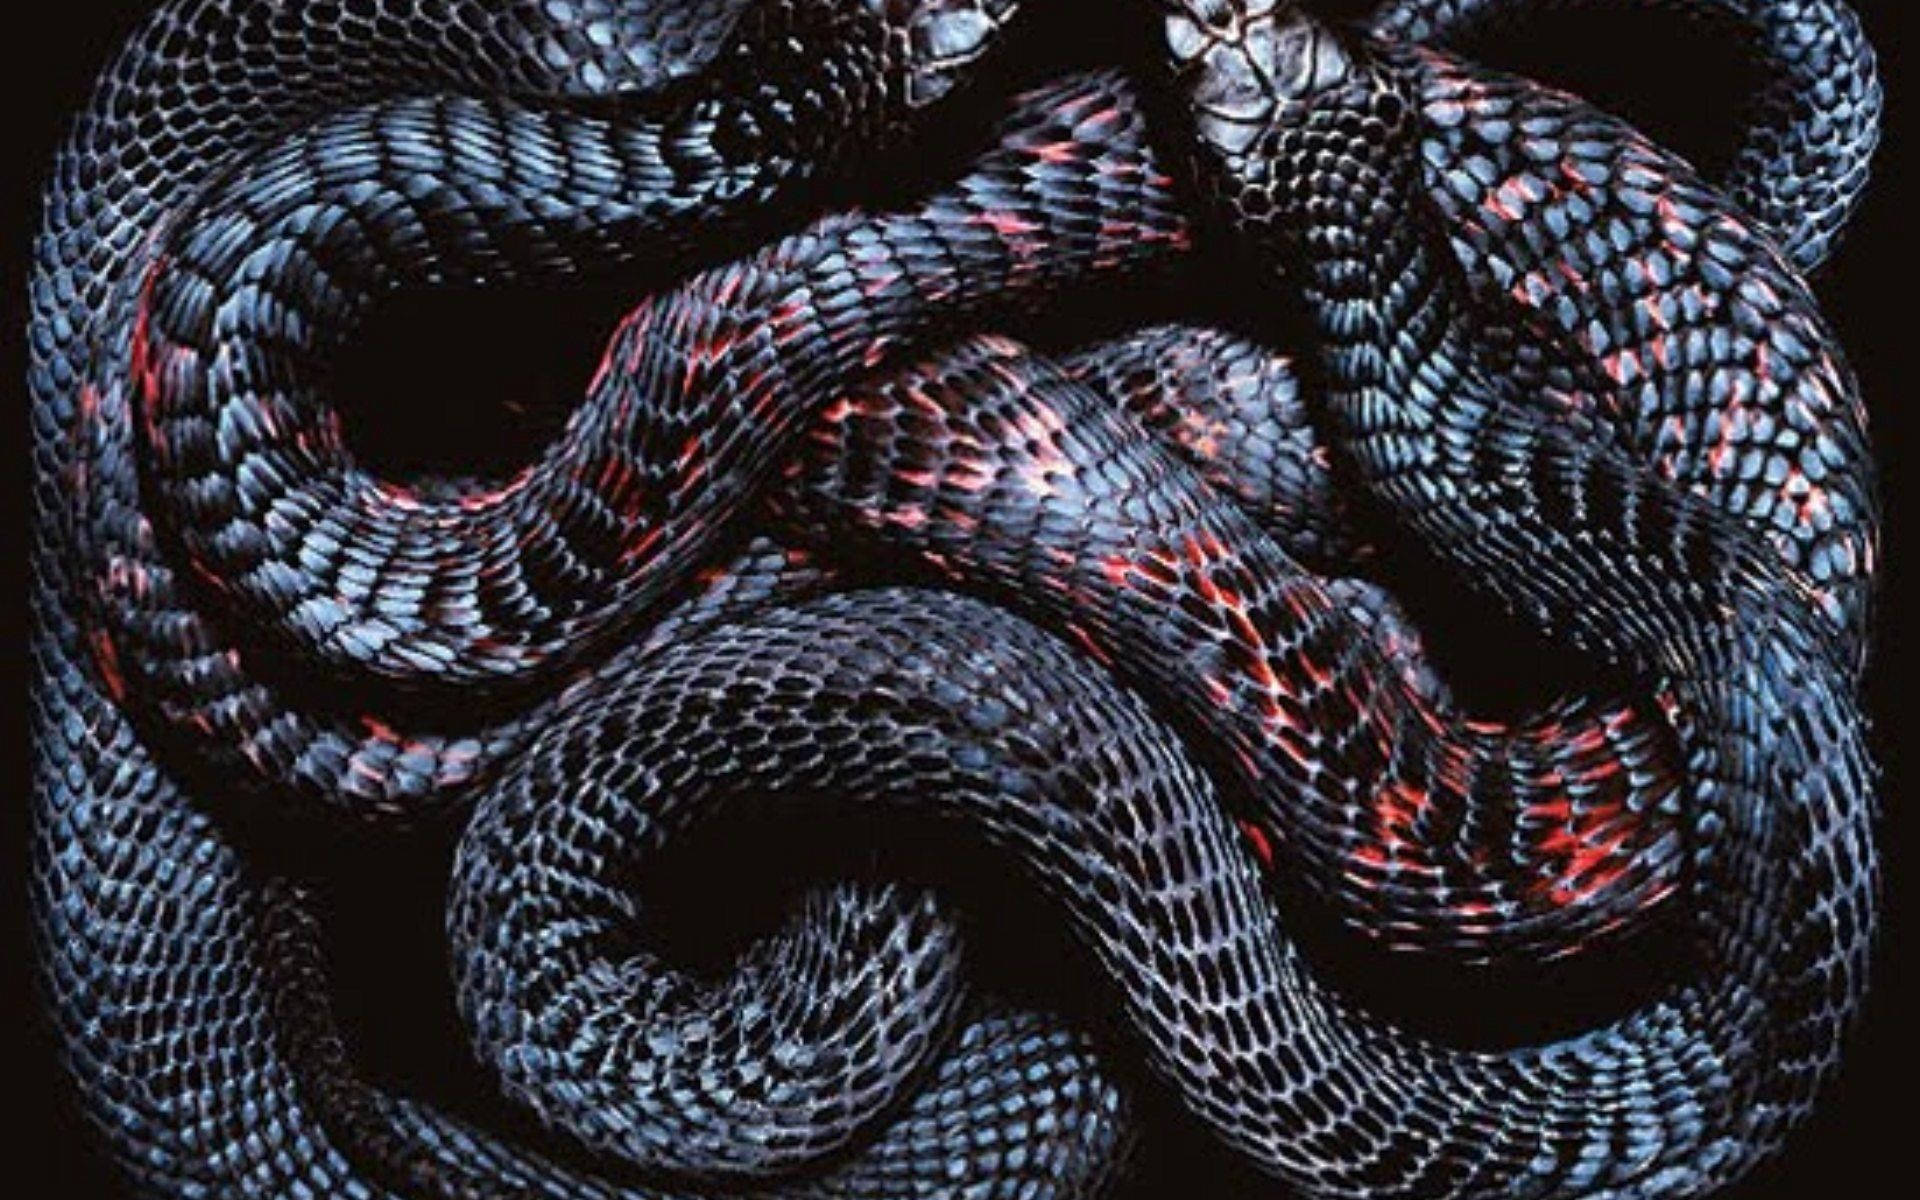 Slithery Scaled Snakes Background